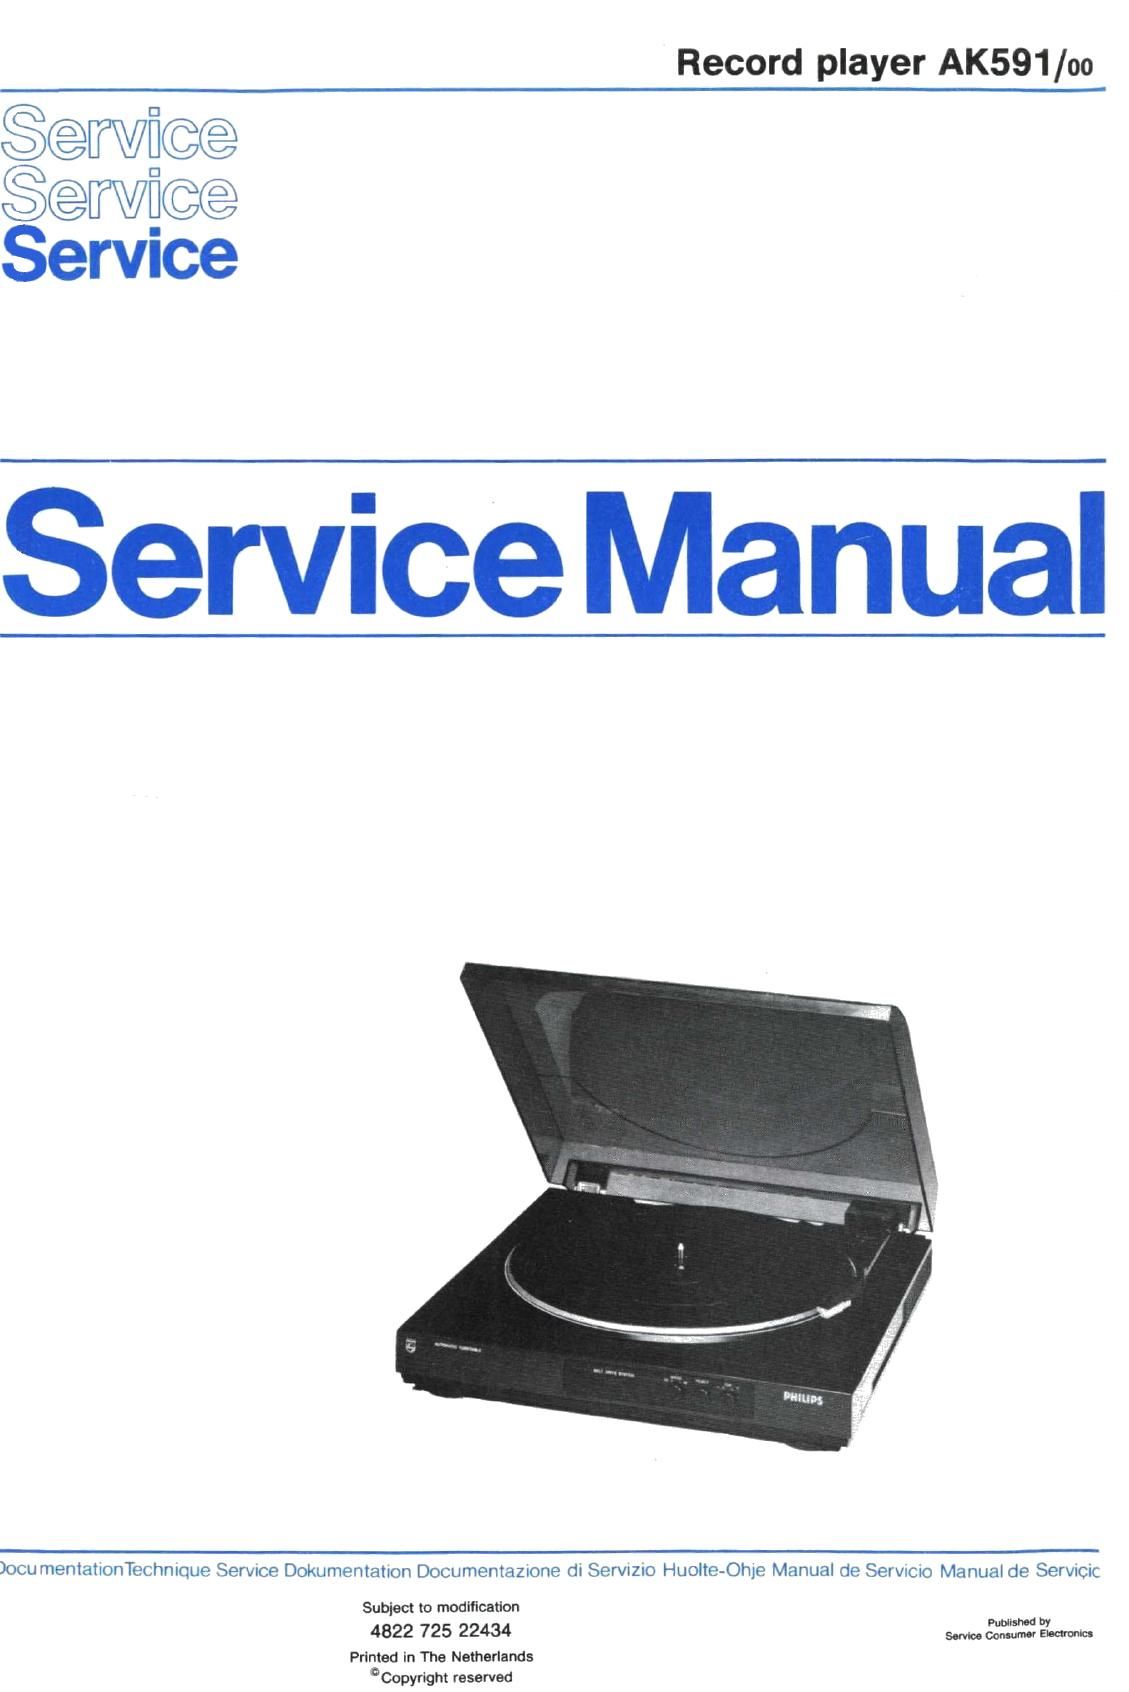 philips ak 591 service manual